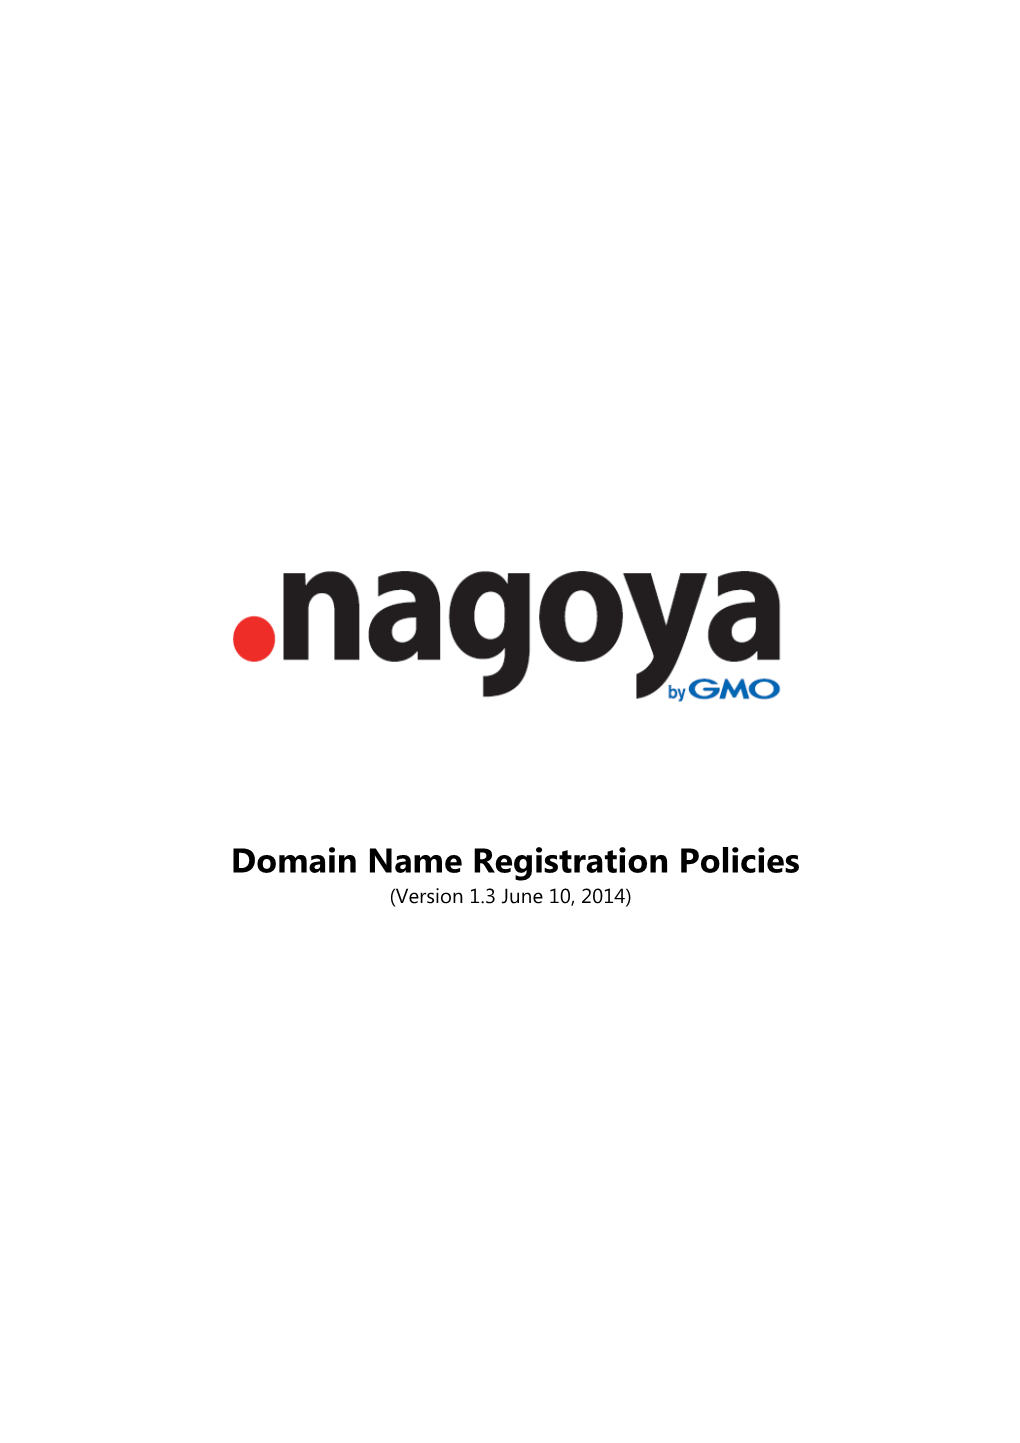 Nagoya Domain Name Registration Policies